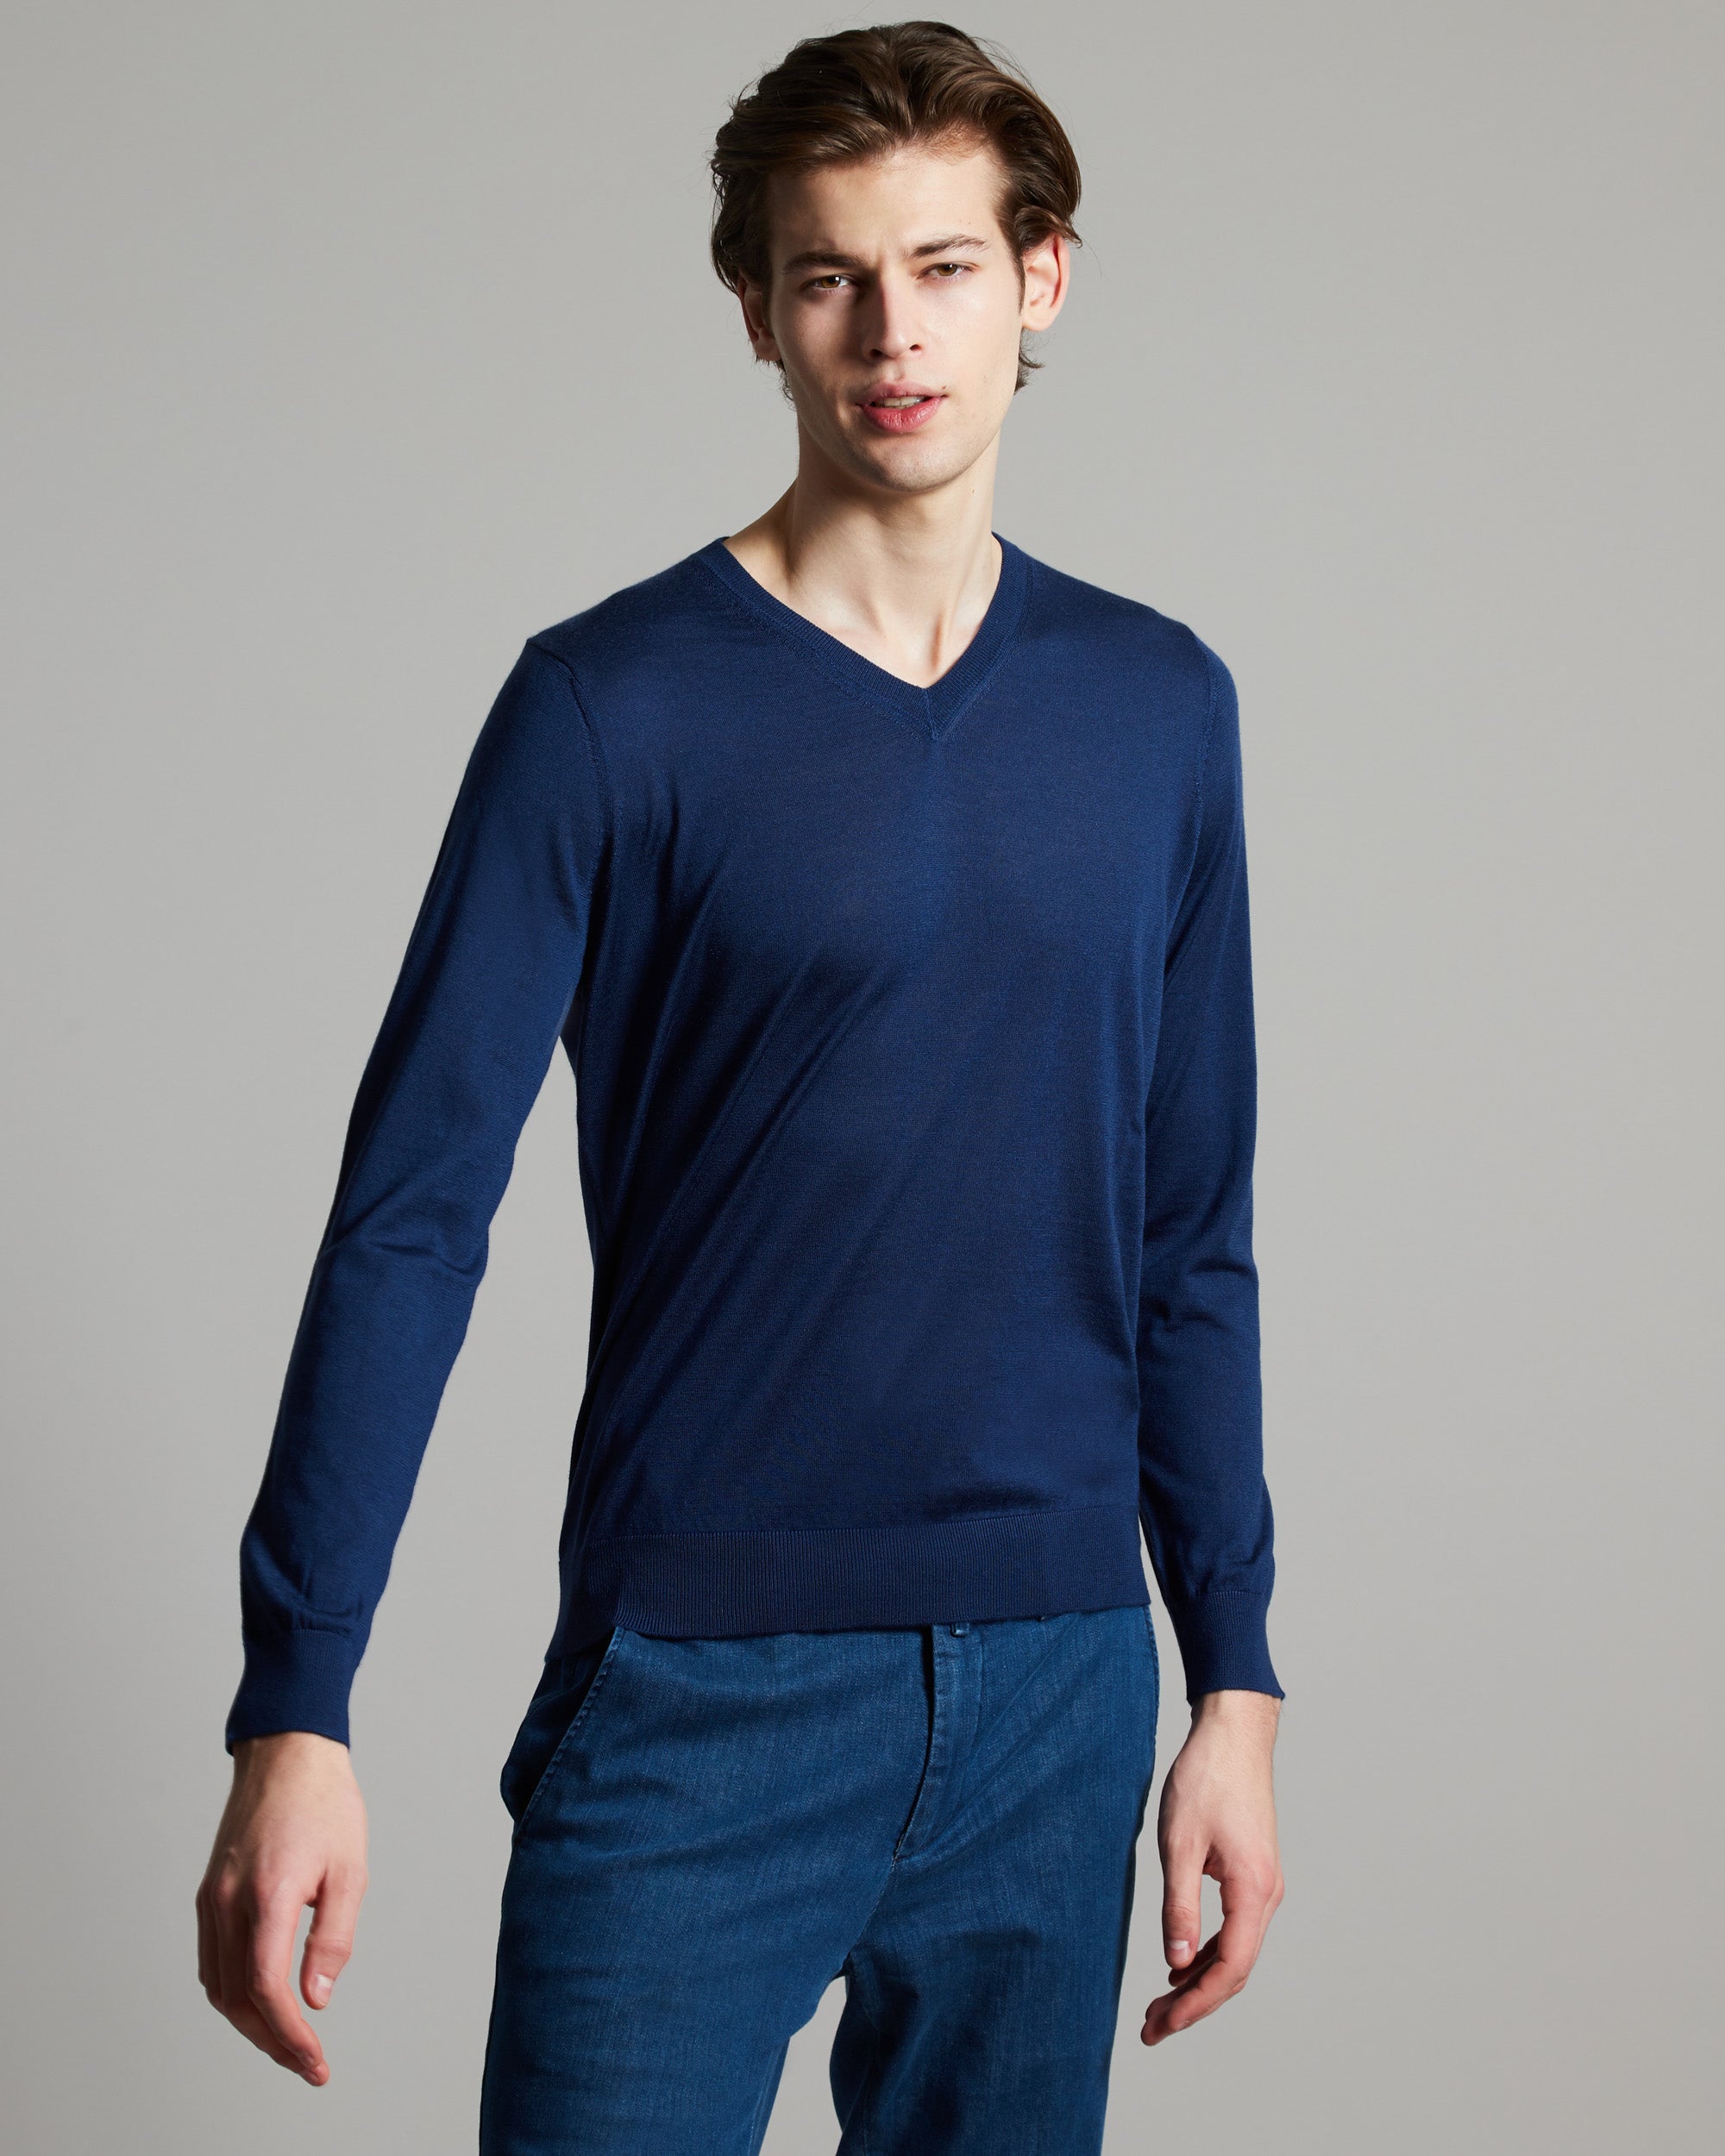 Blue cashmere and silk men's V-neck sweater